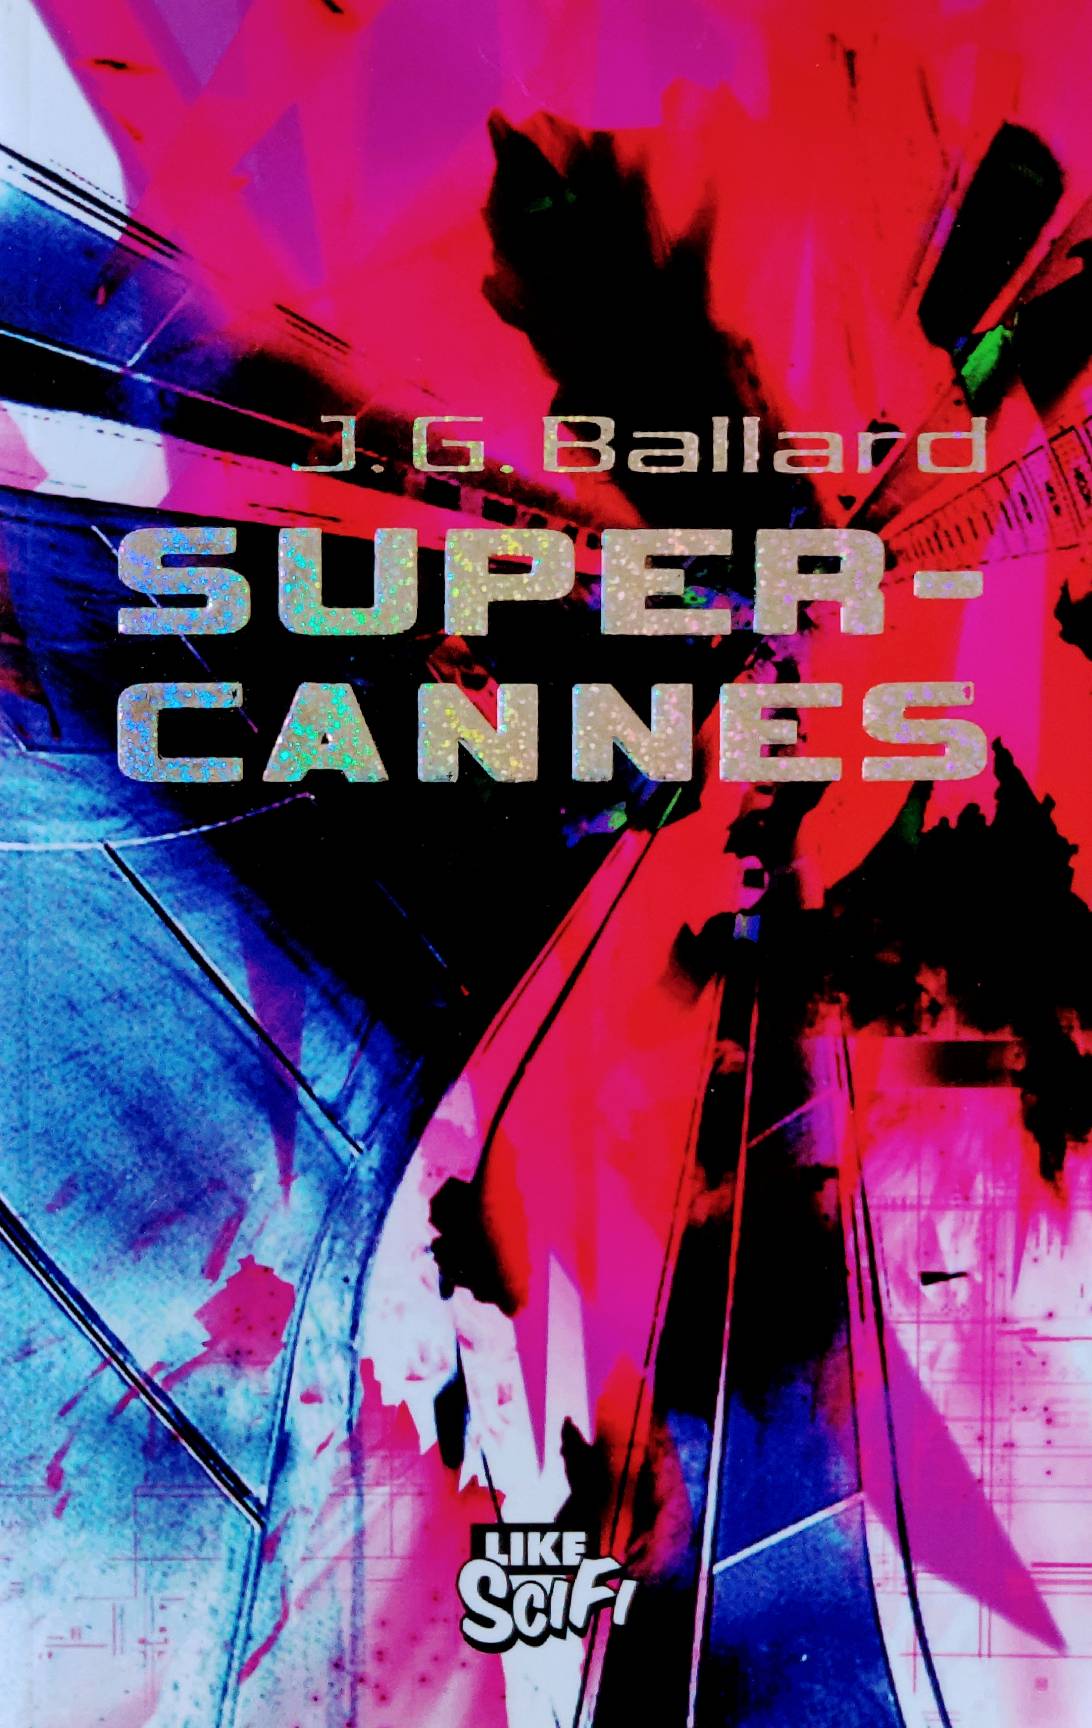 J. G. Ballard: Super-Cannes (Paperback, Finnish language, 2002, Like SciFi)